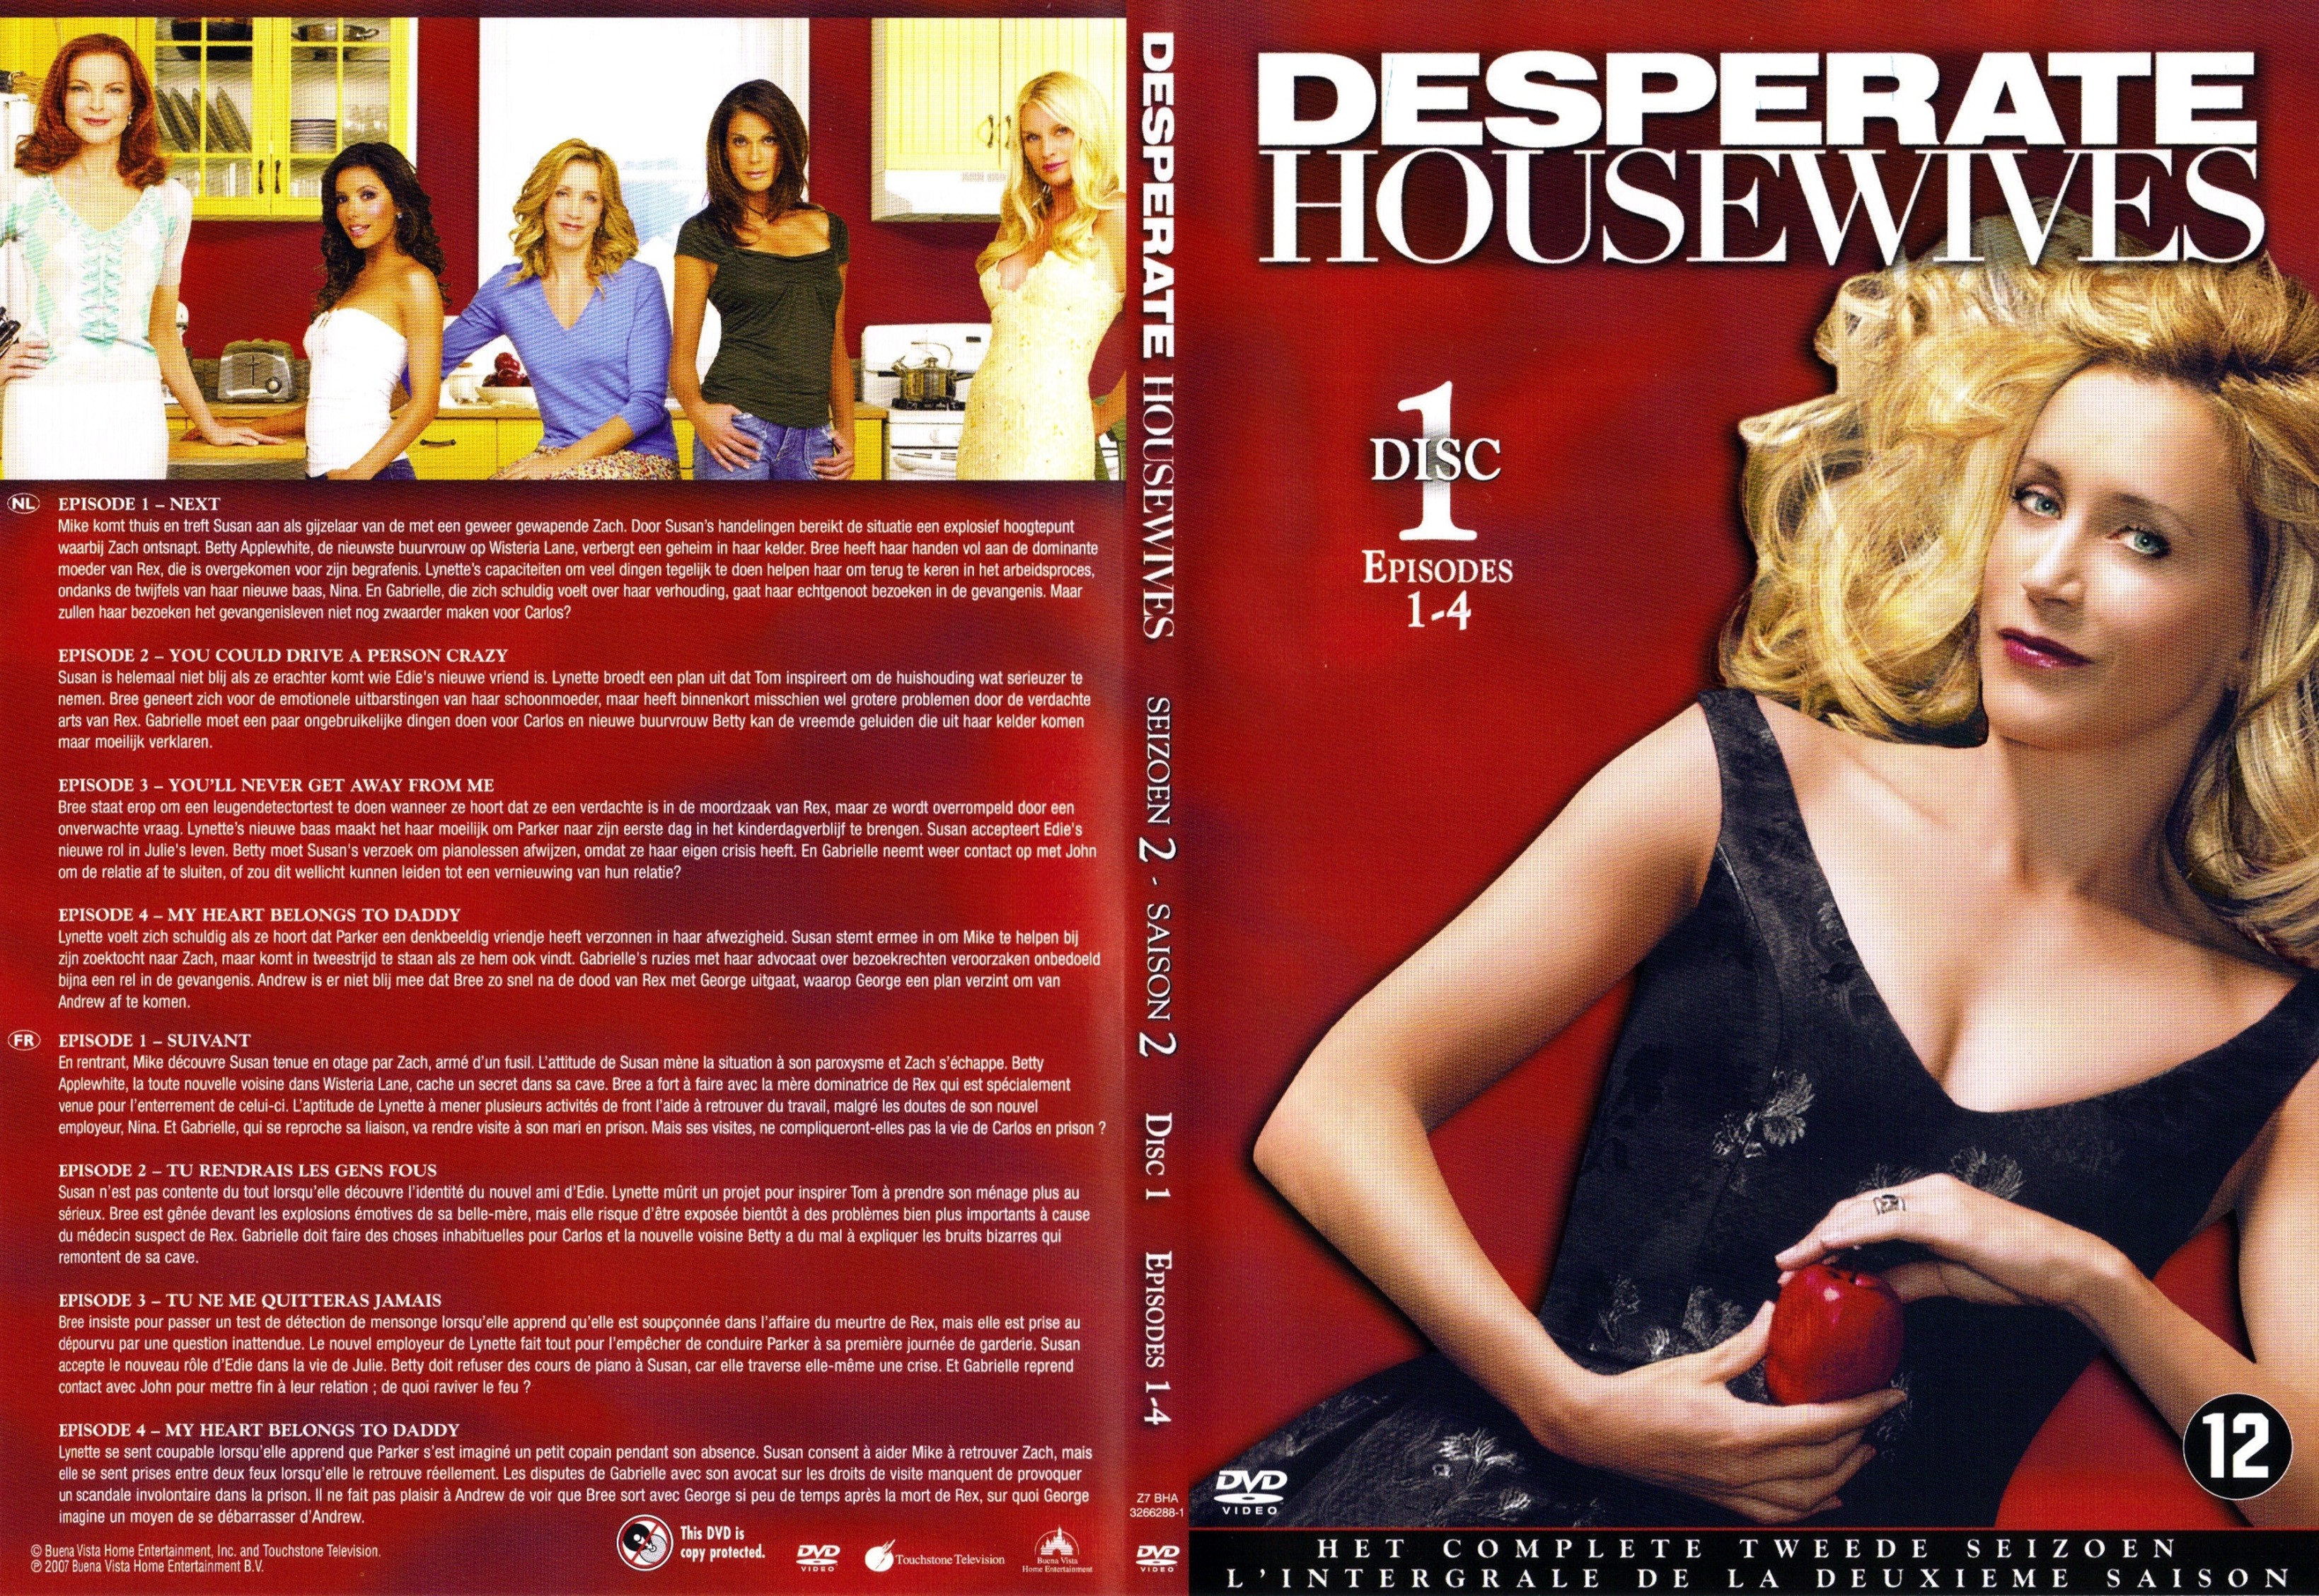 Jaquette DVD Desperate Housewives saison 2 DVD 1